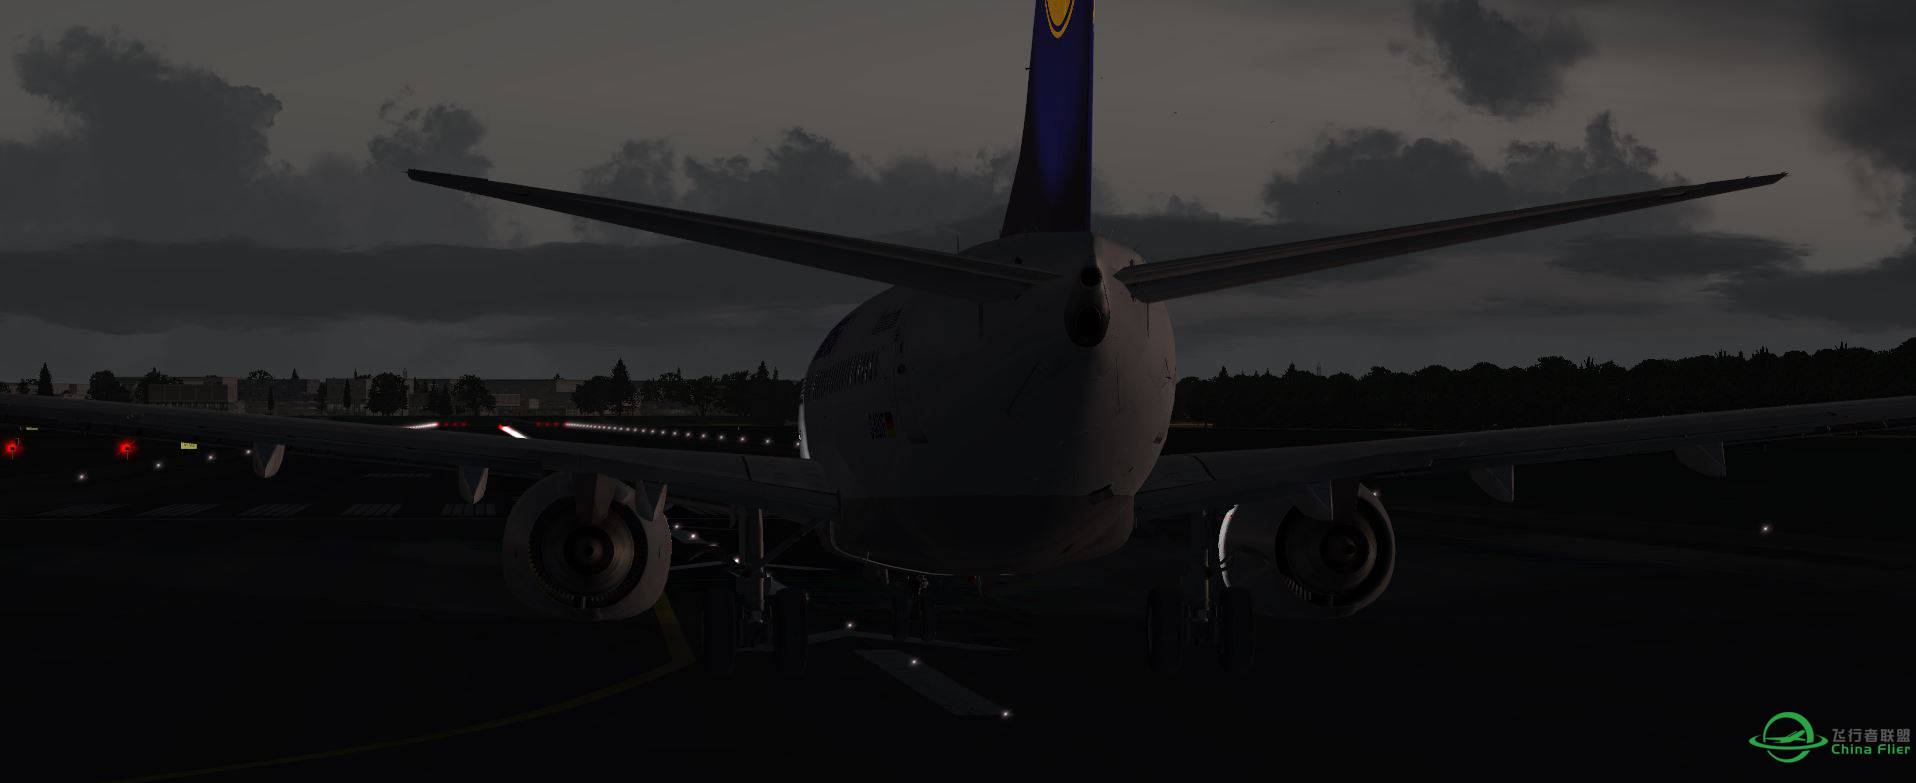 B737 Lufthansa-9317 